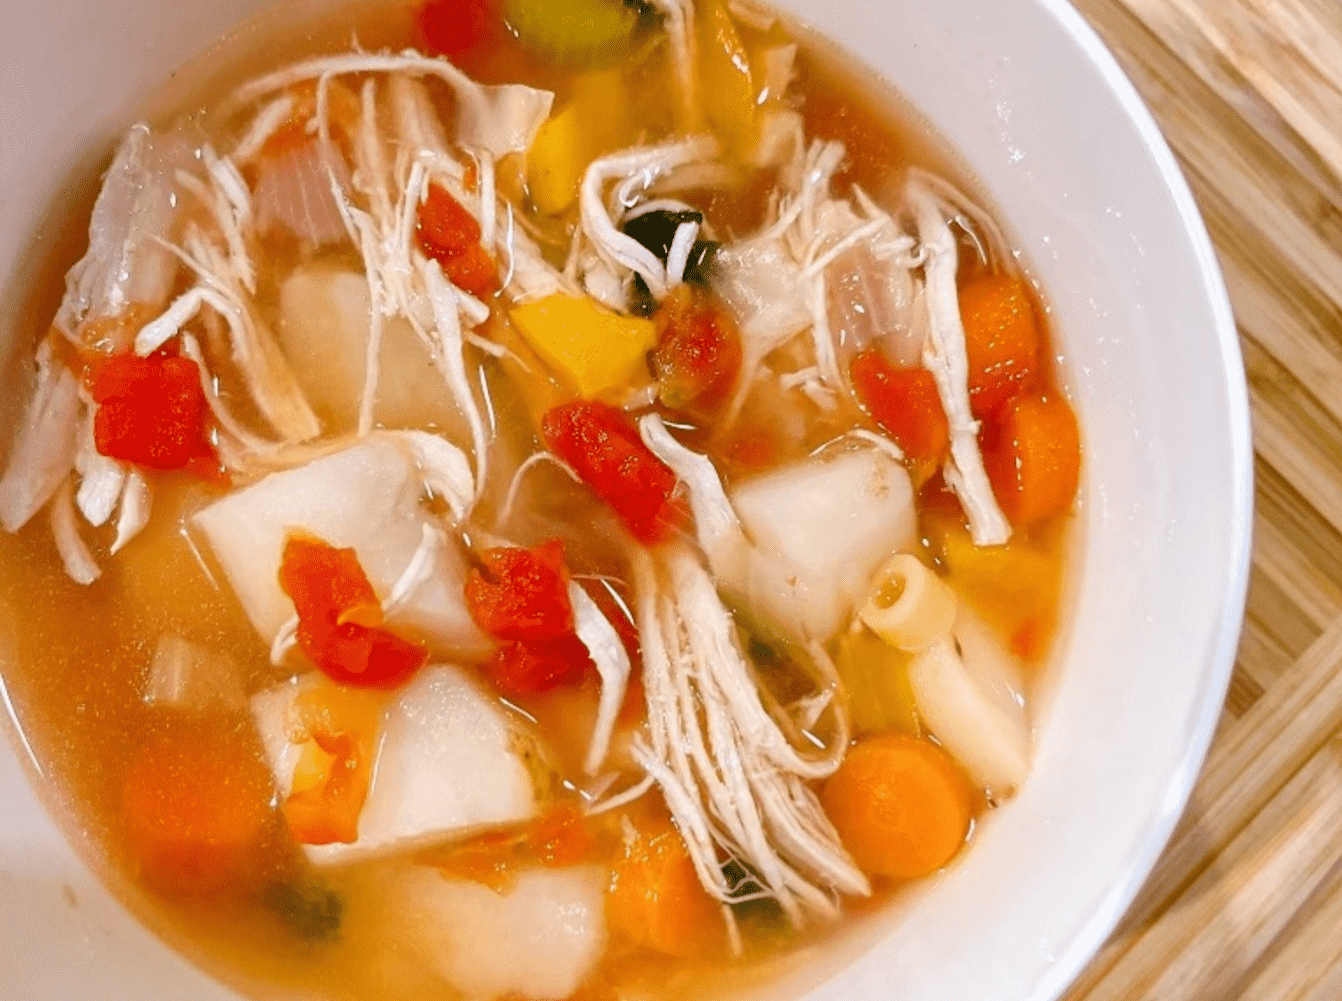 Sicilian Chicken Soup